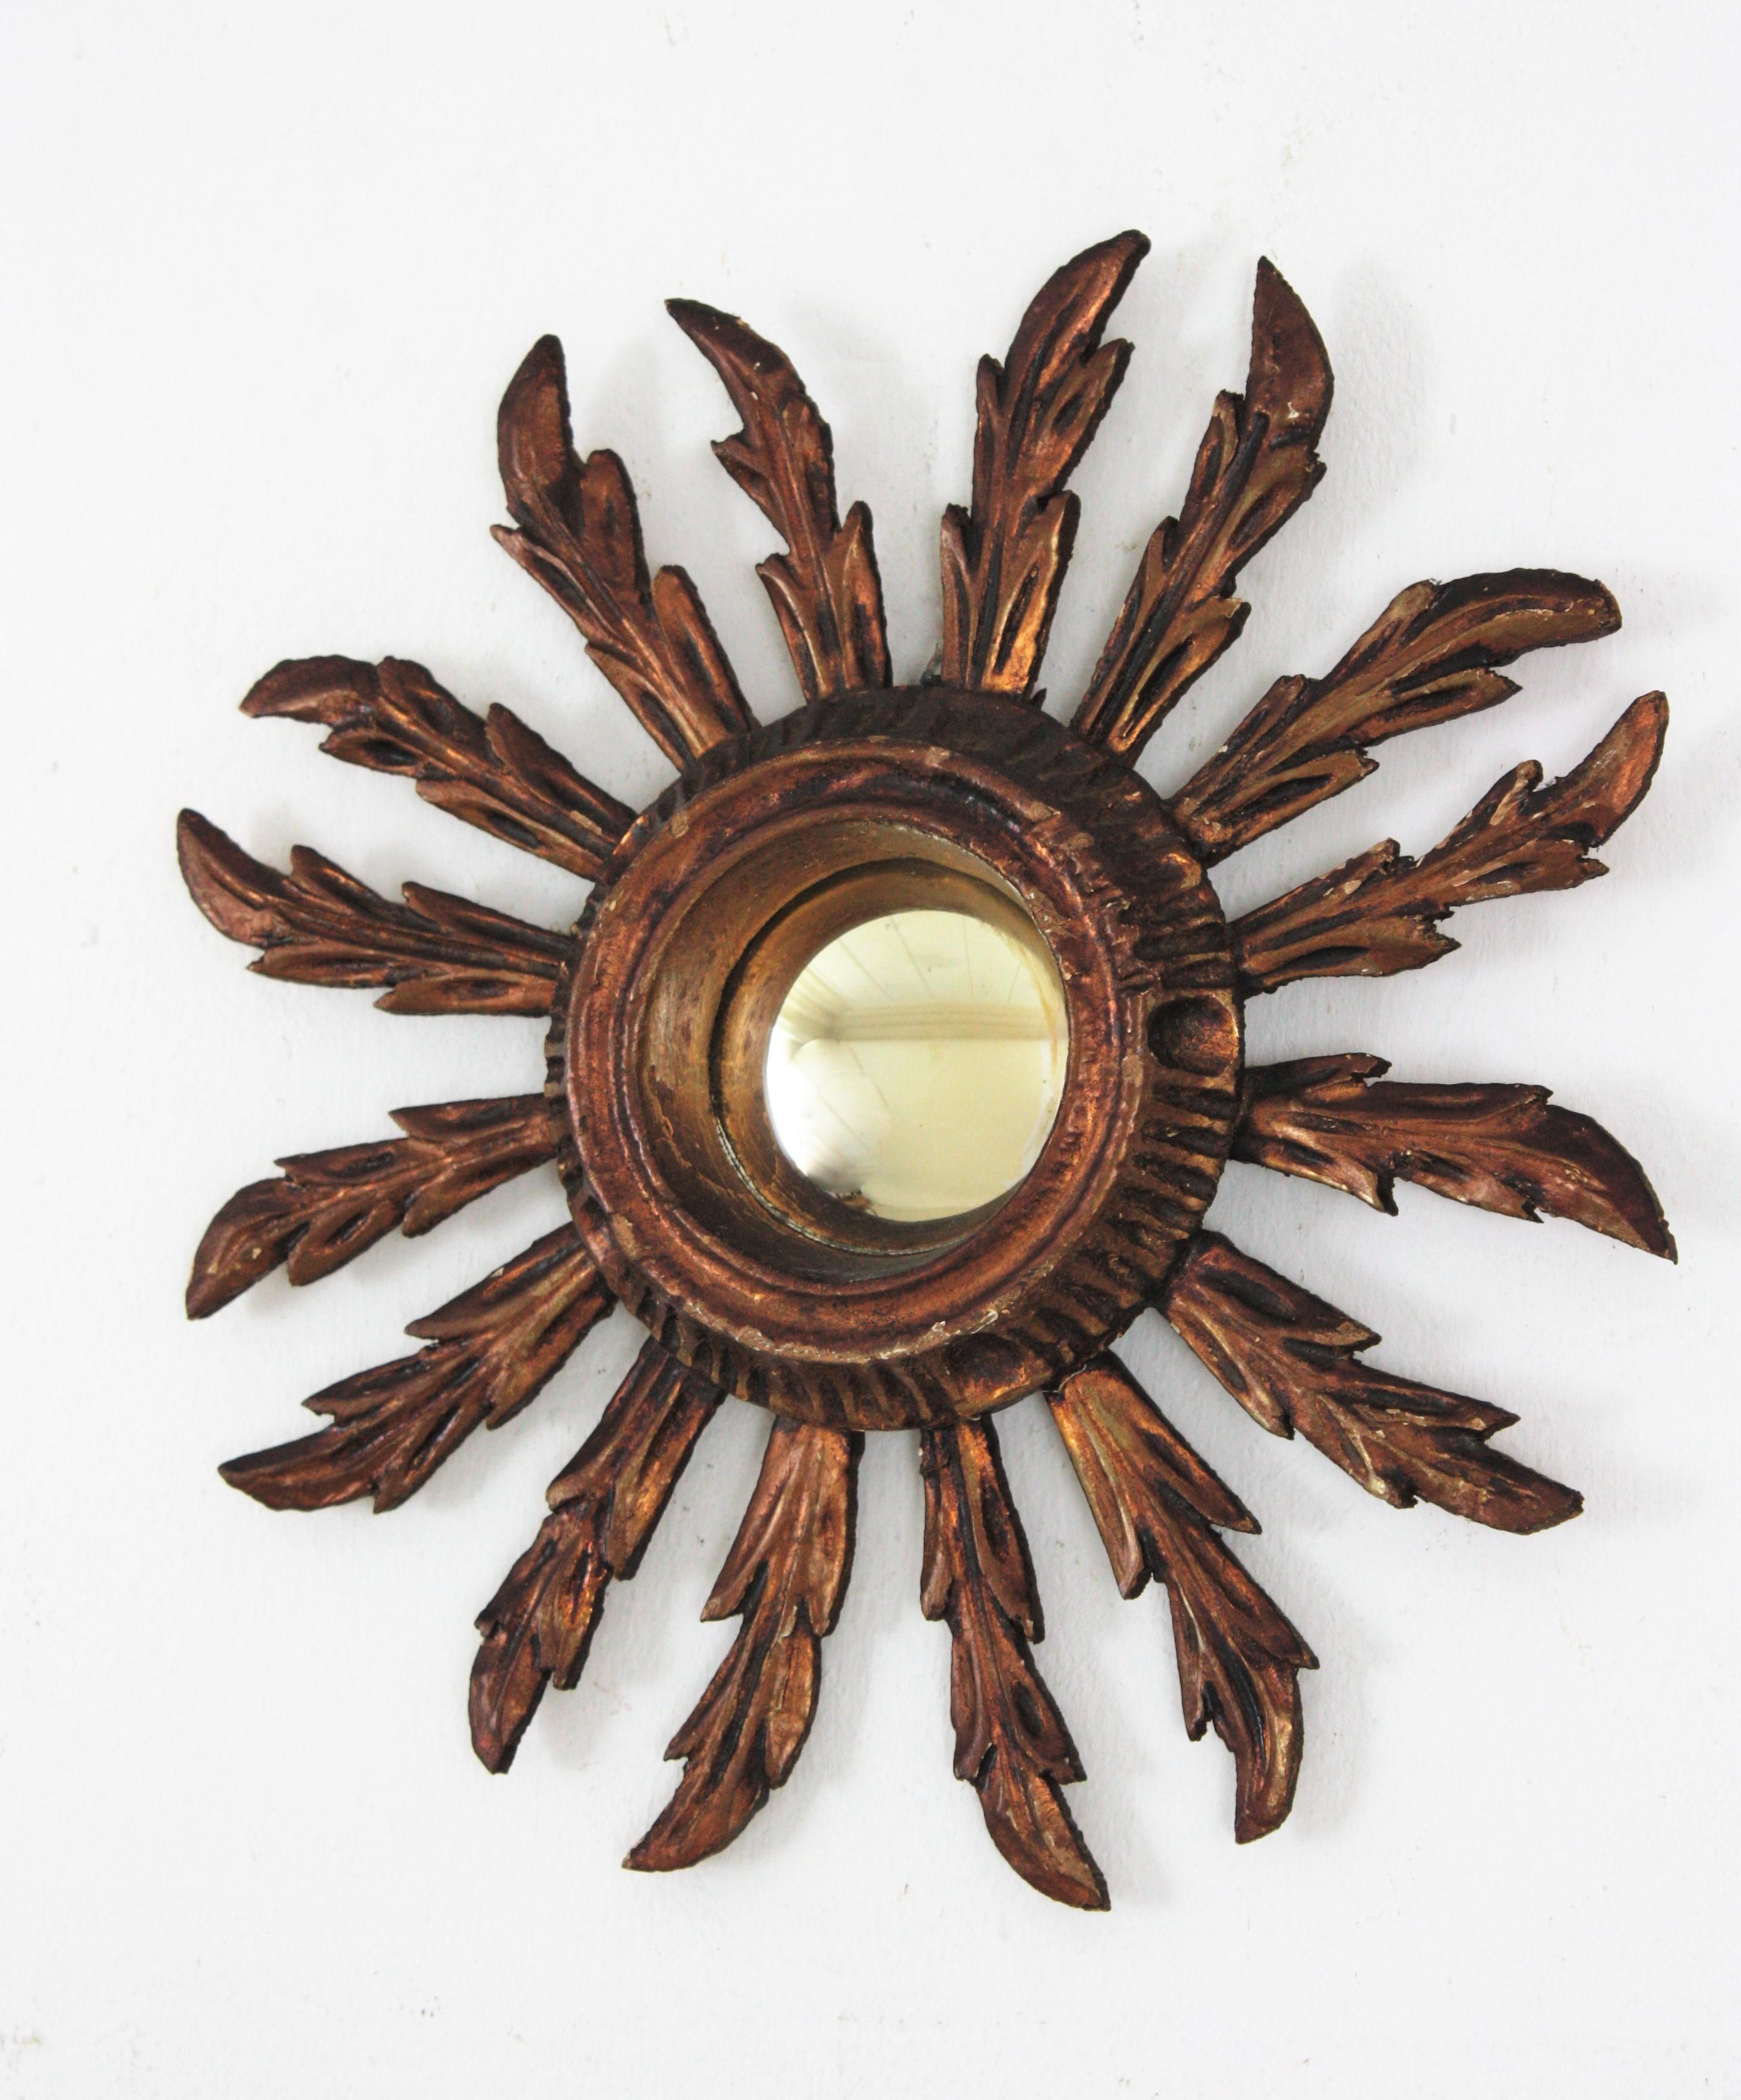 Sunburst Convex Mirror in Small Scale, Baroque Style In Good Condition For Sale In Barcelona, ES